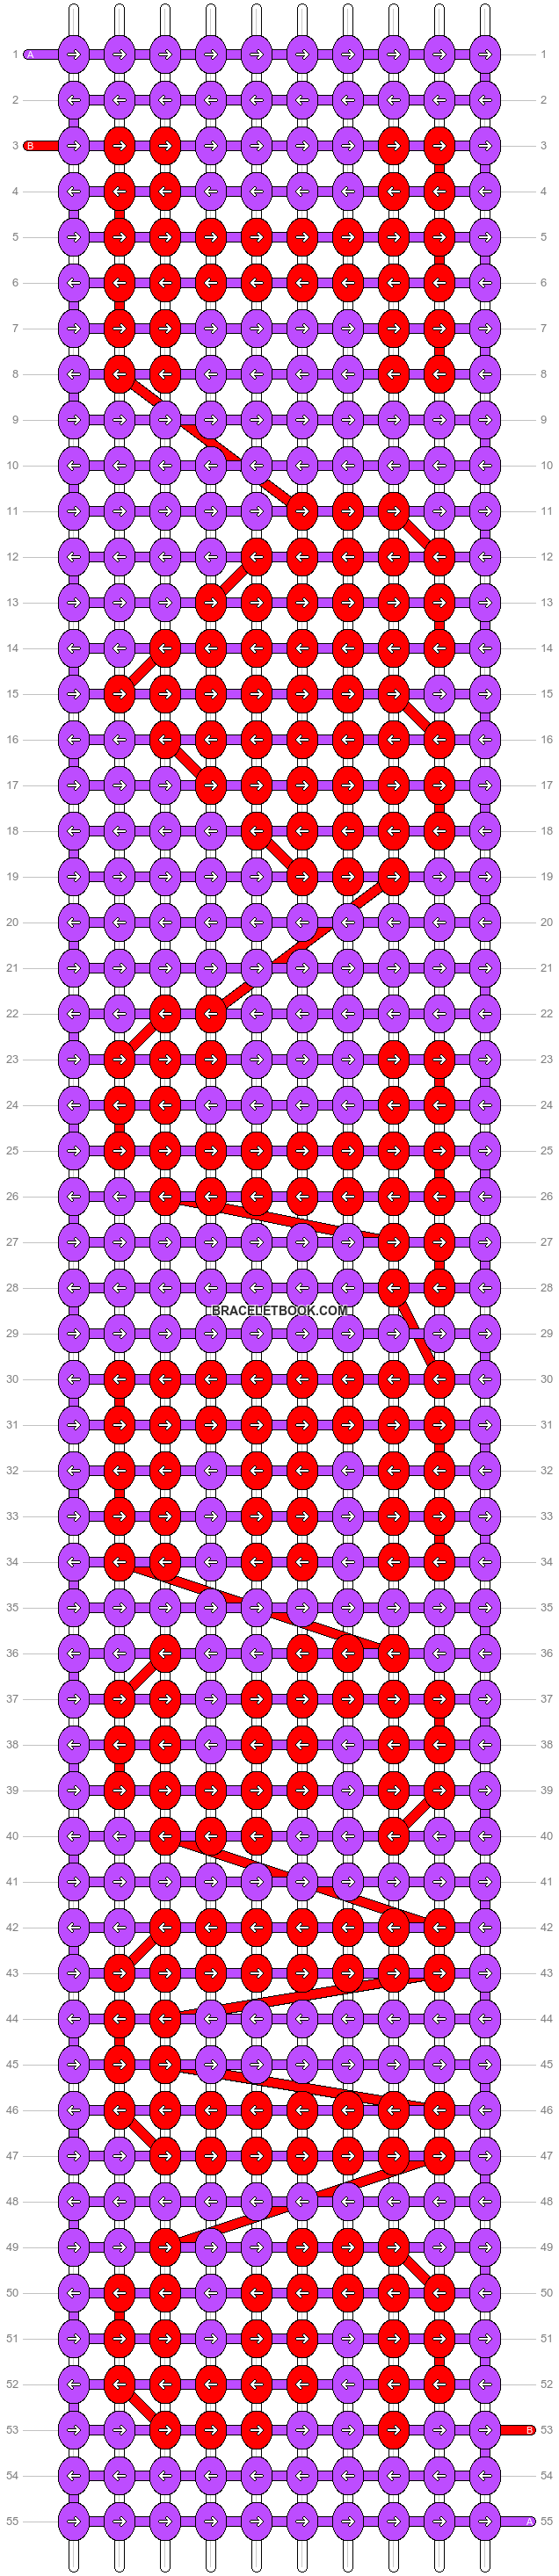 Alpha pattern #19594 variation #27064 pattern